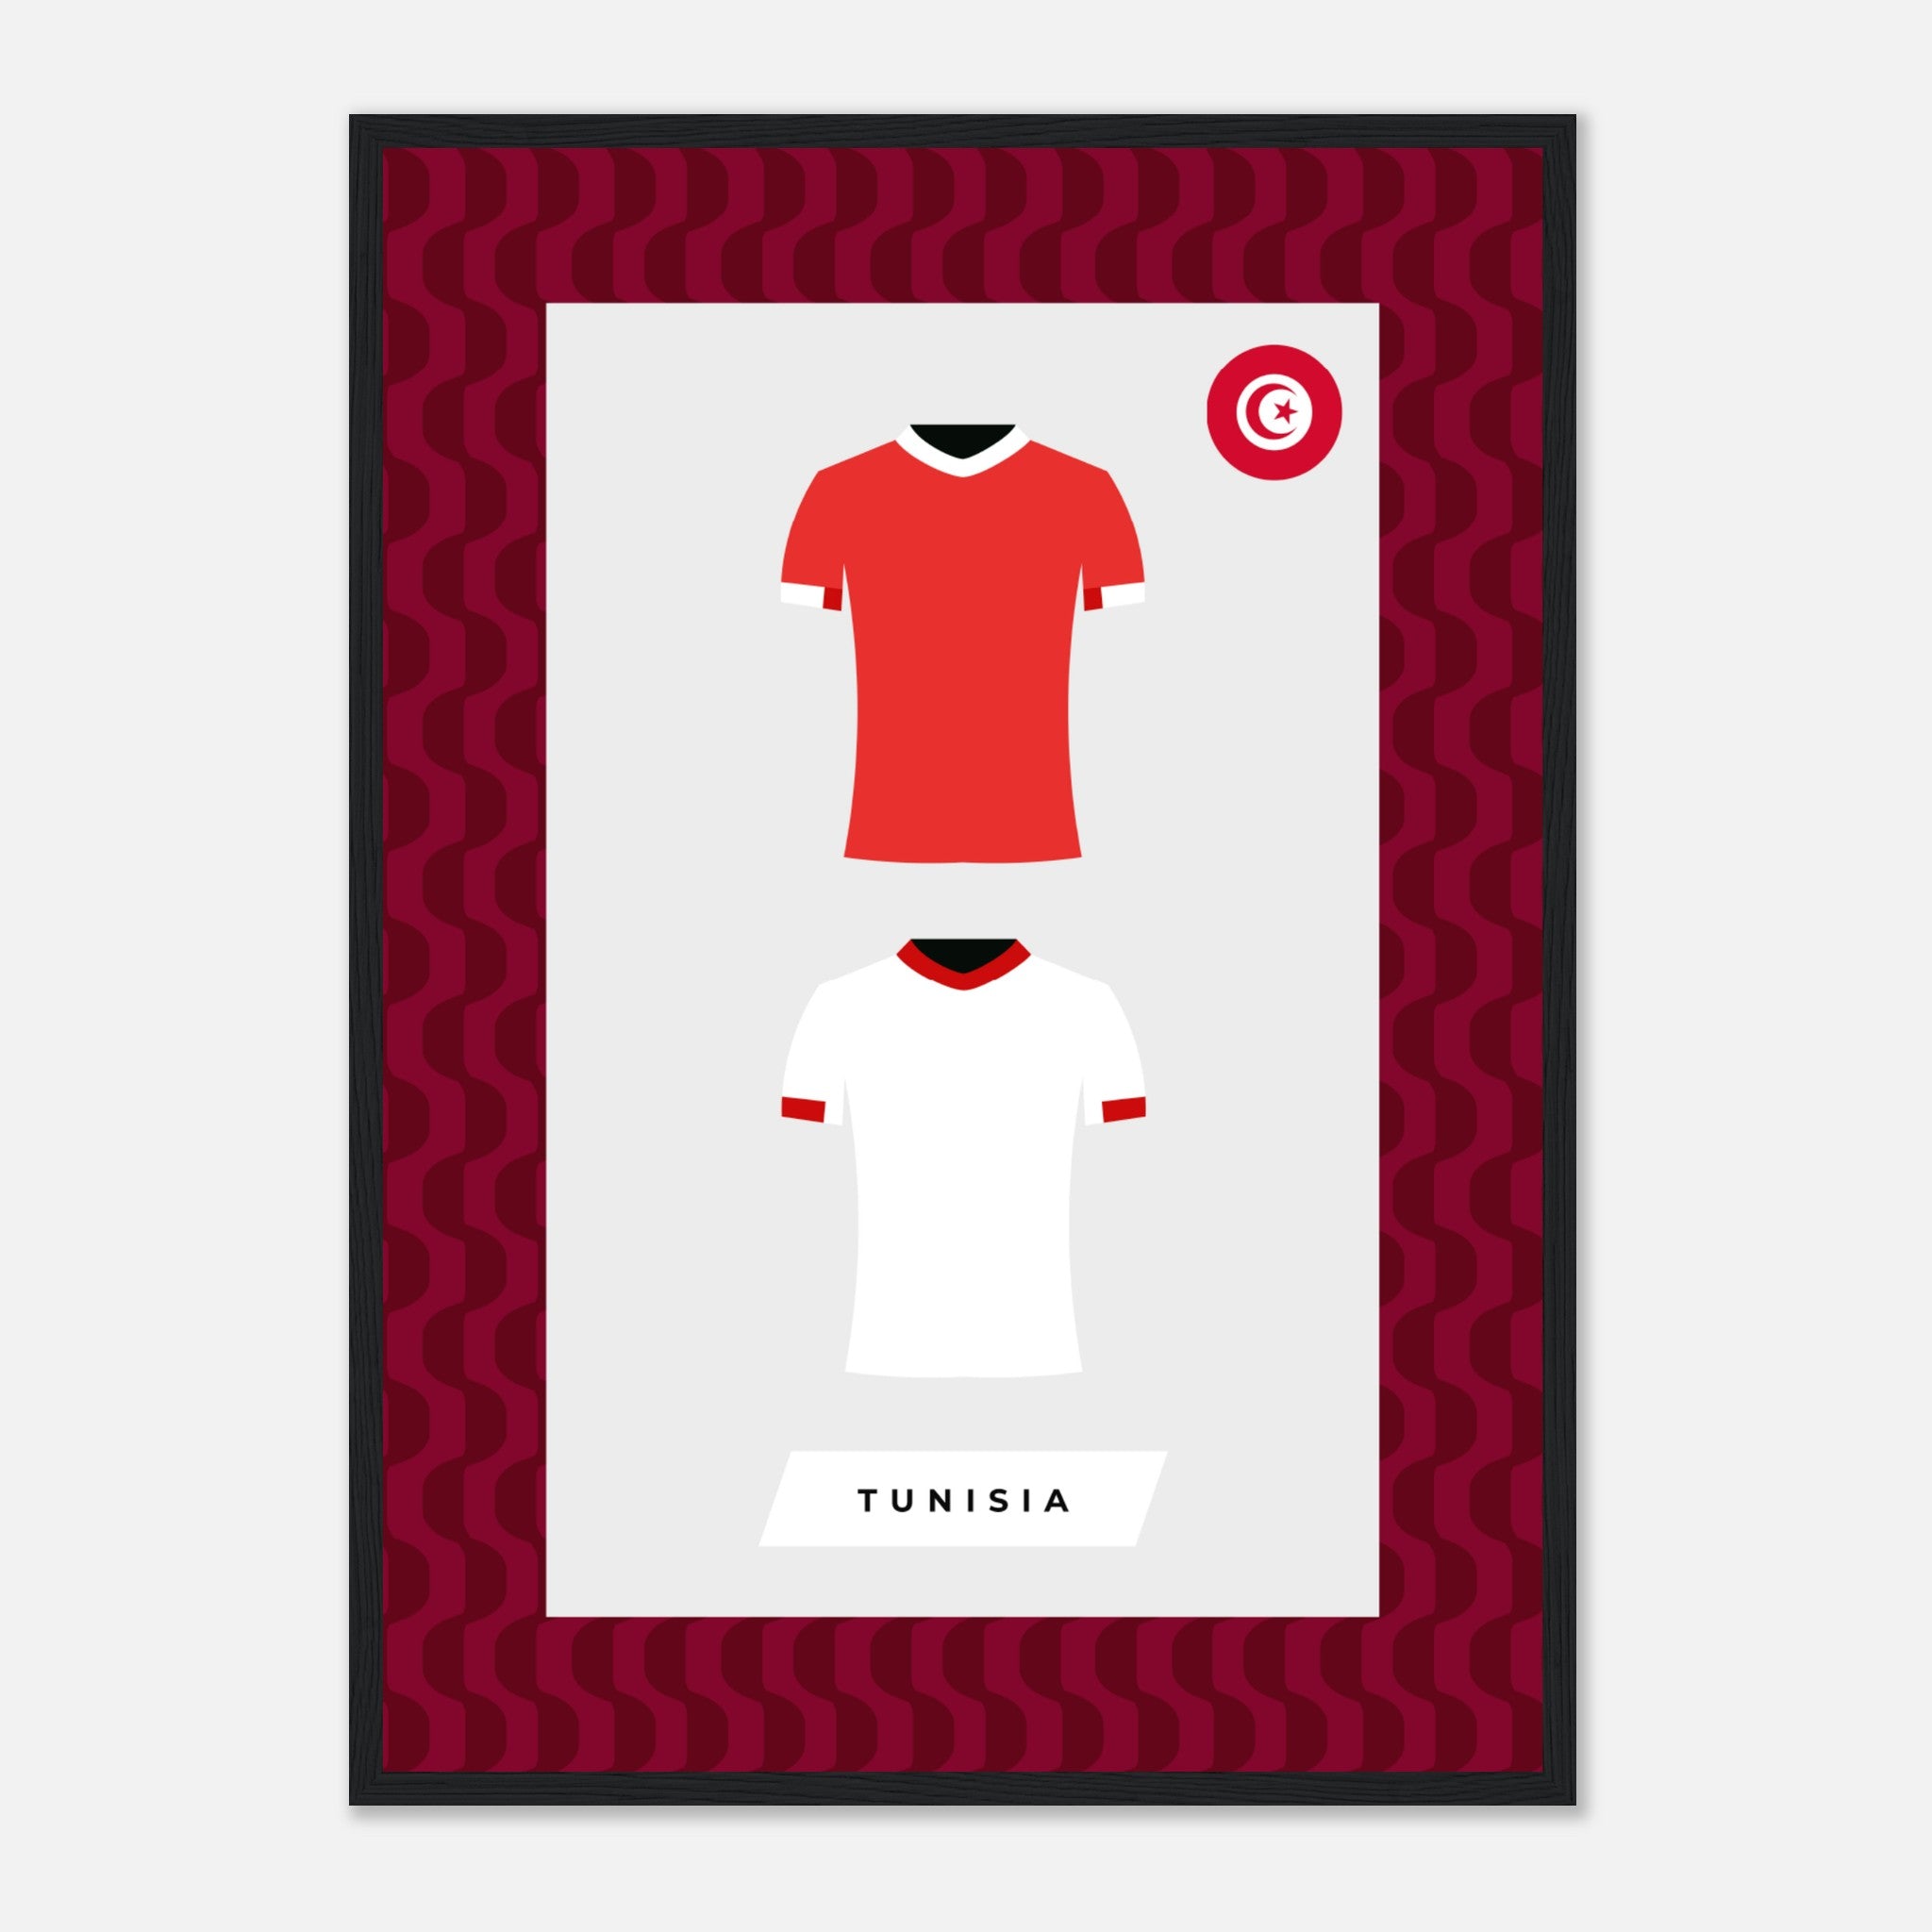 Tunisia Football Kit Poster